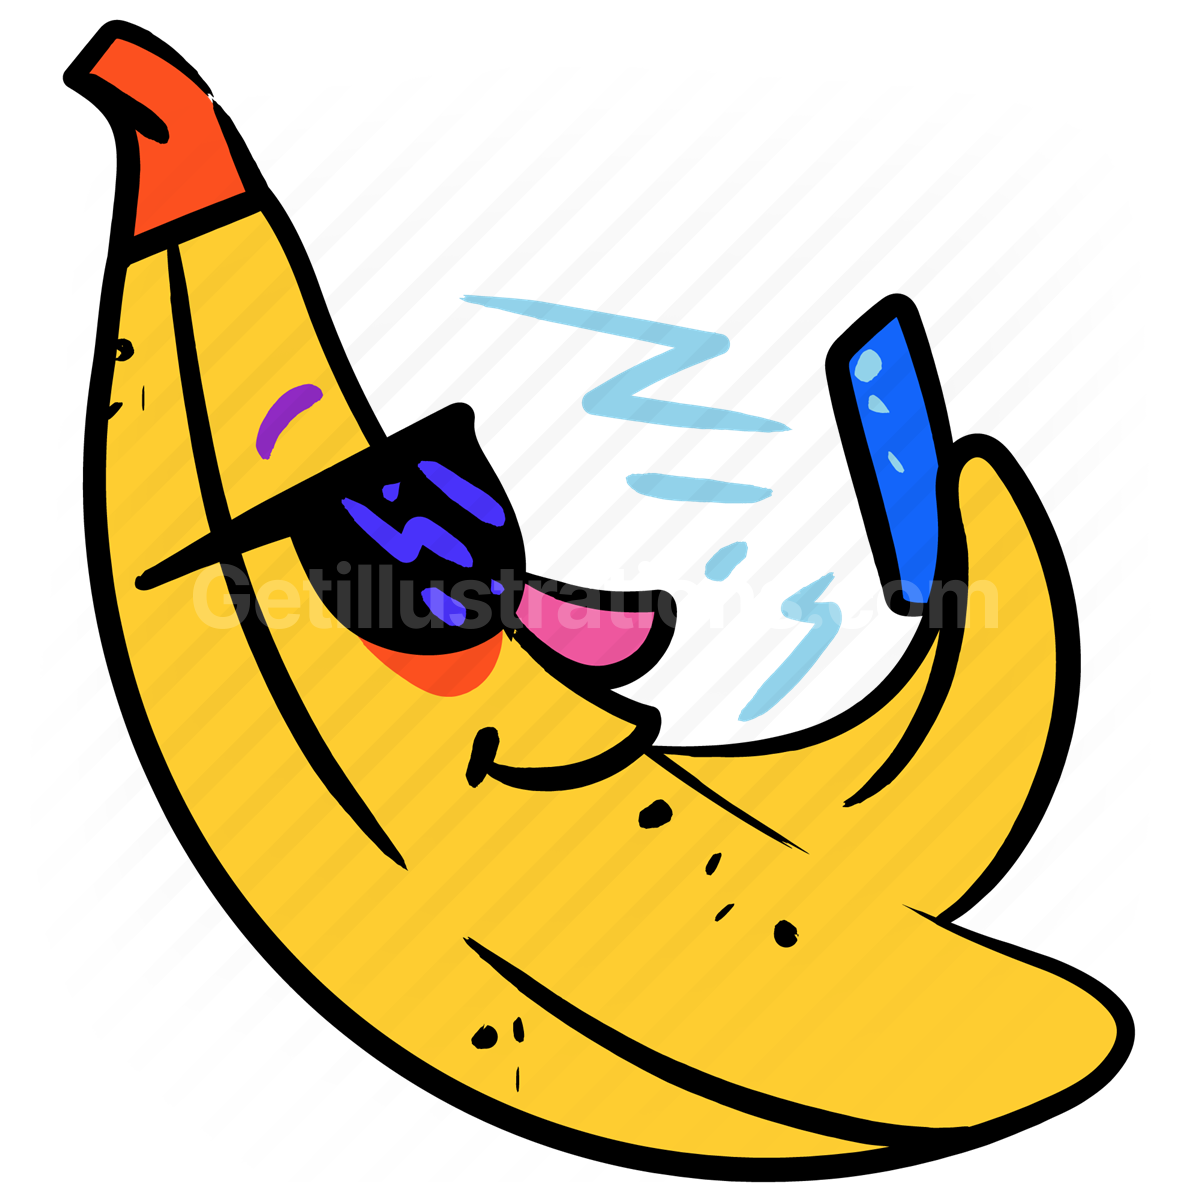 banana, smartphone, phone, mobile, sunglasses, sticker, smiley, cool